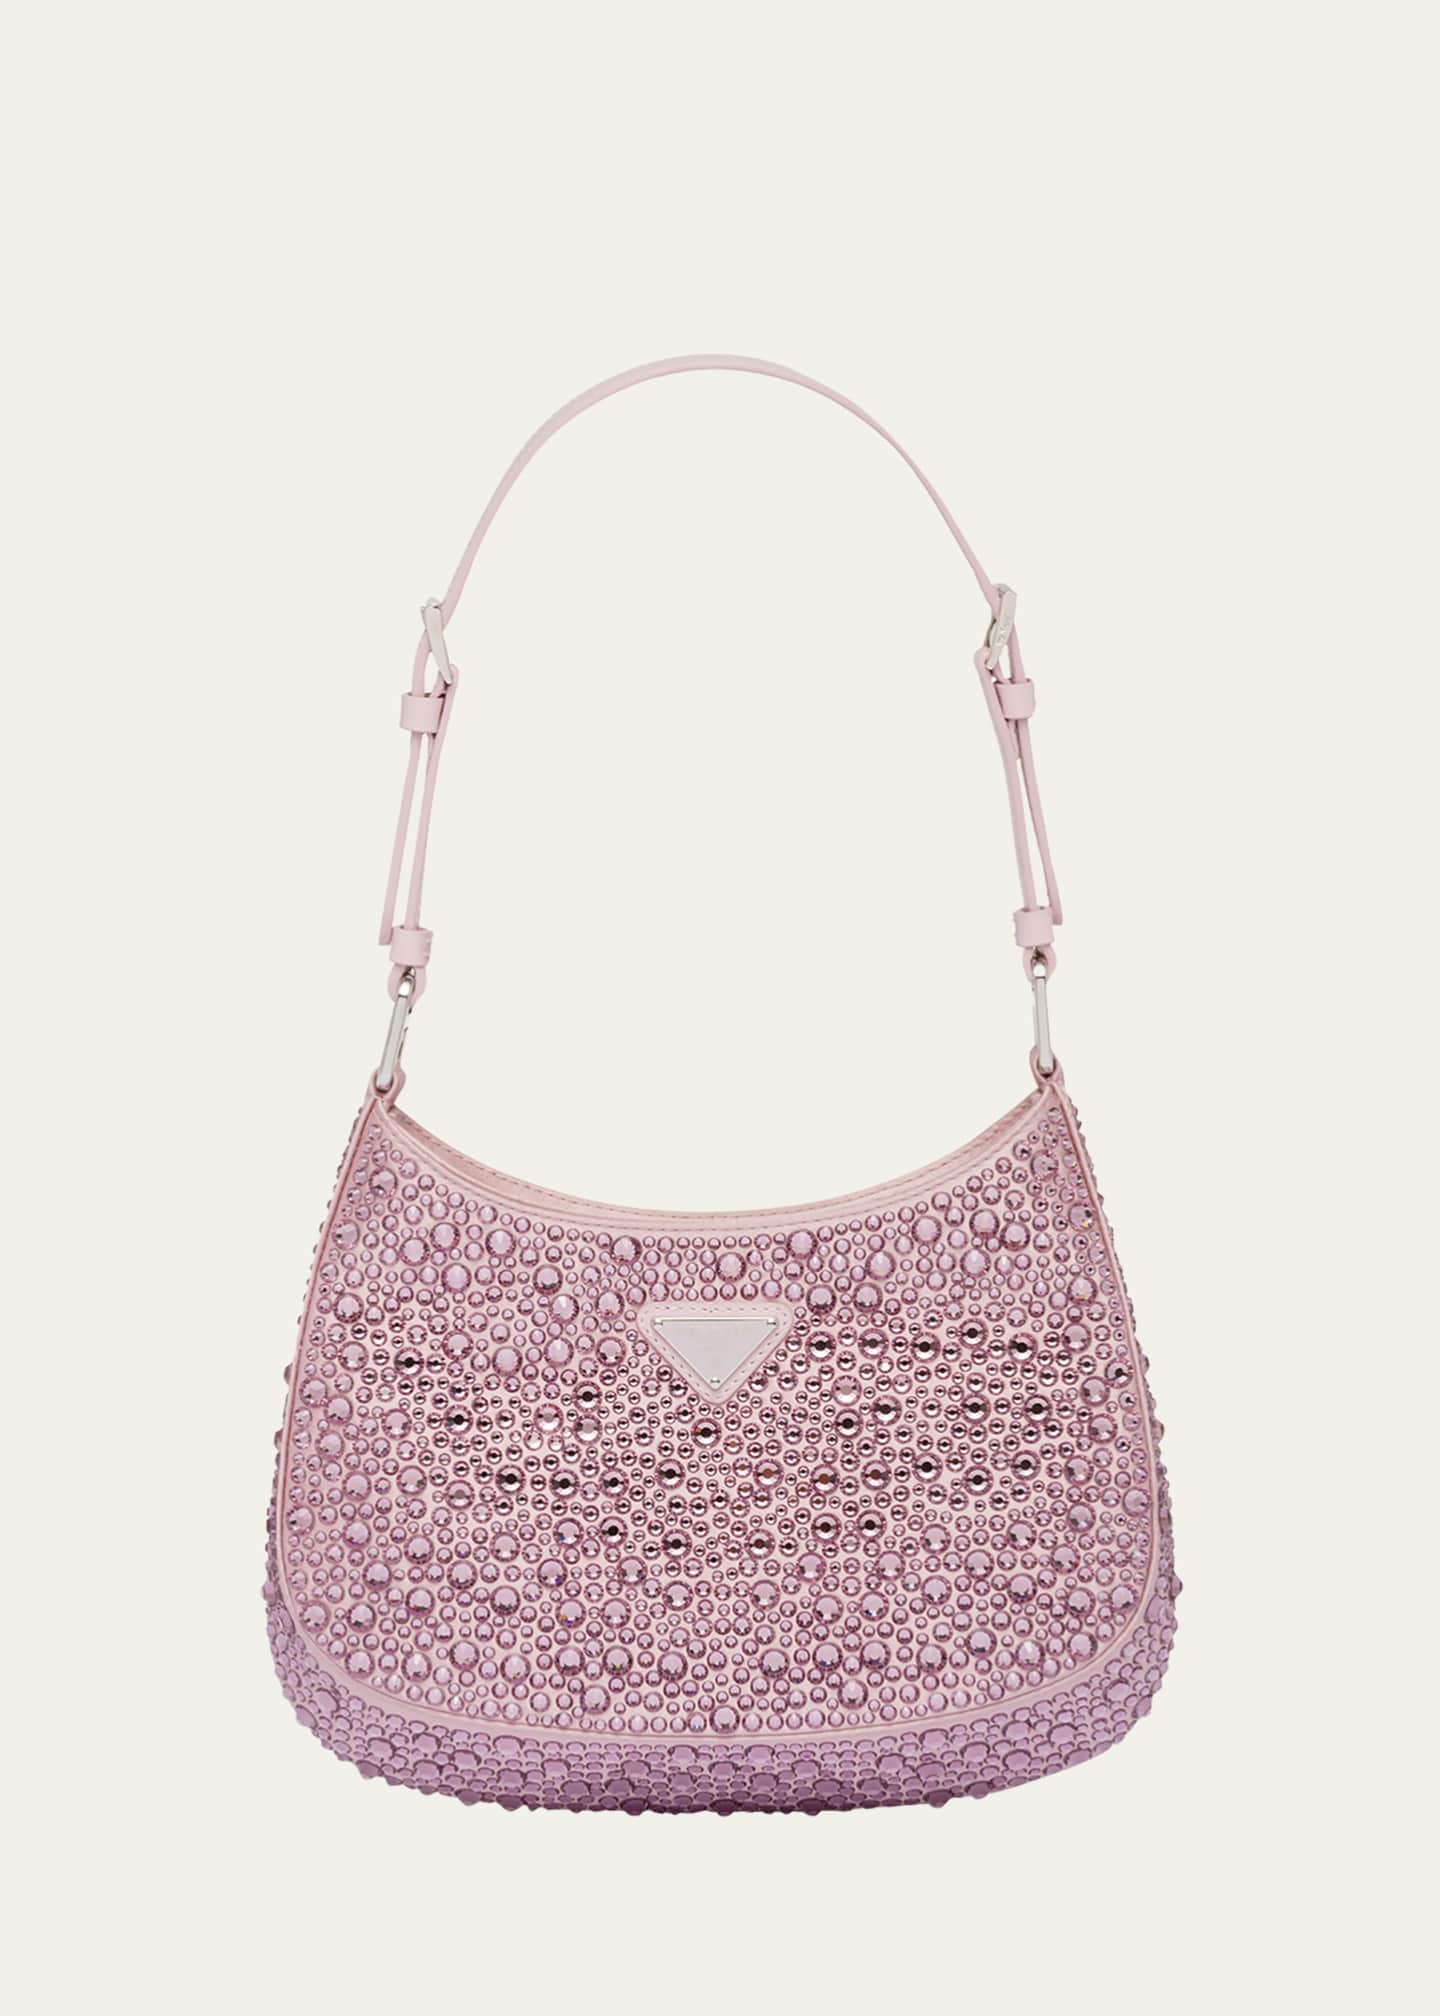 Prada - Women's Cleo Bag with Crystals Shoulder Bag - Pink - Satin